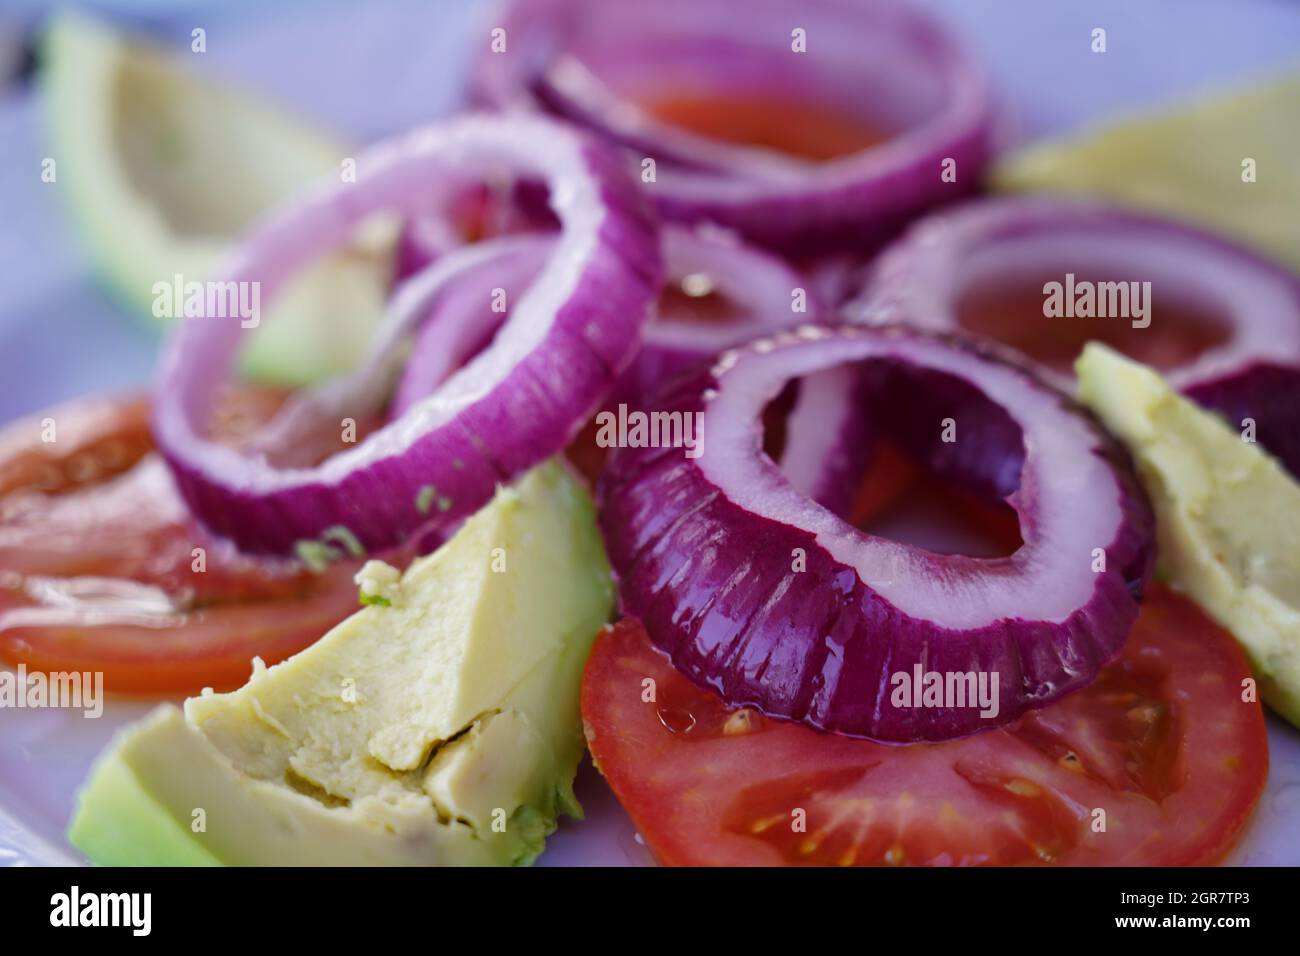 Raw Vegan Salad Of Fresh Onion Rings, Tomatoe And Avocado Slices, Tenerife, Canary Islands Stock Photo